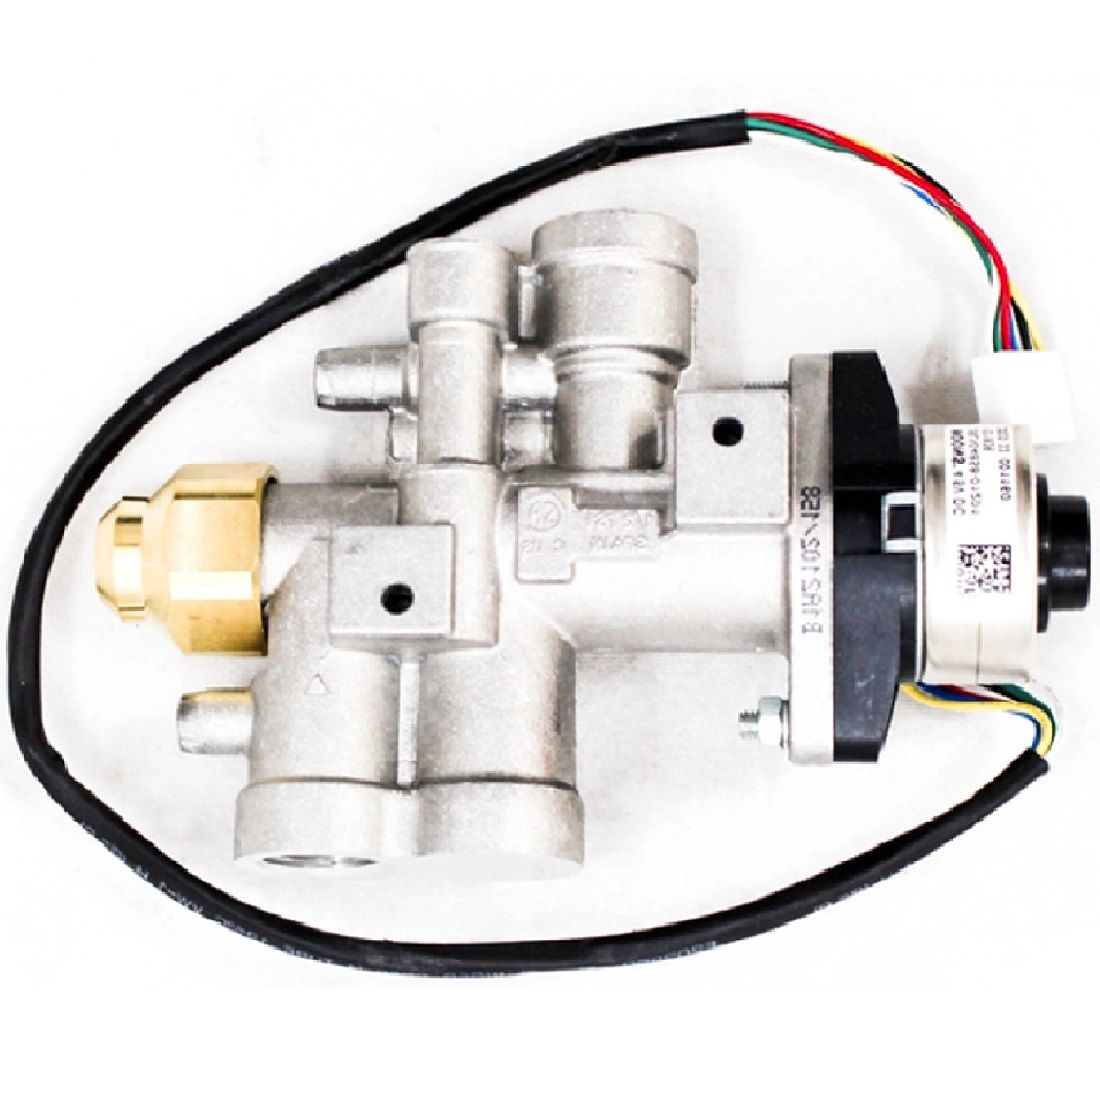 IHPJ7960 | Gas Valve | EcoFlow Control System